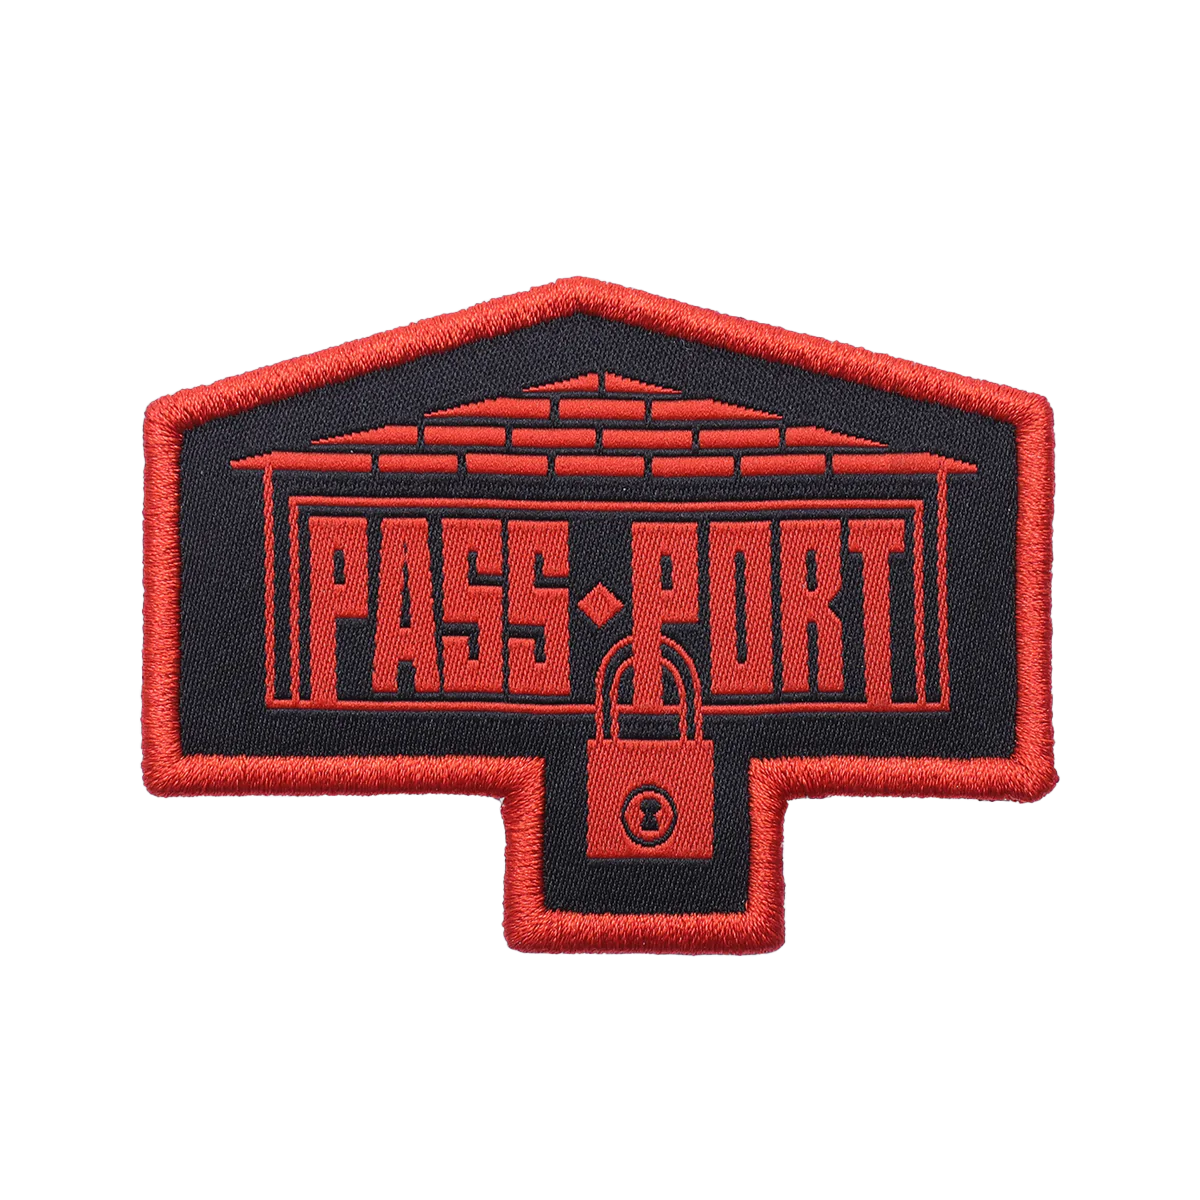 Passport Depot Embroidered Patch